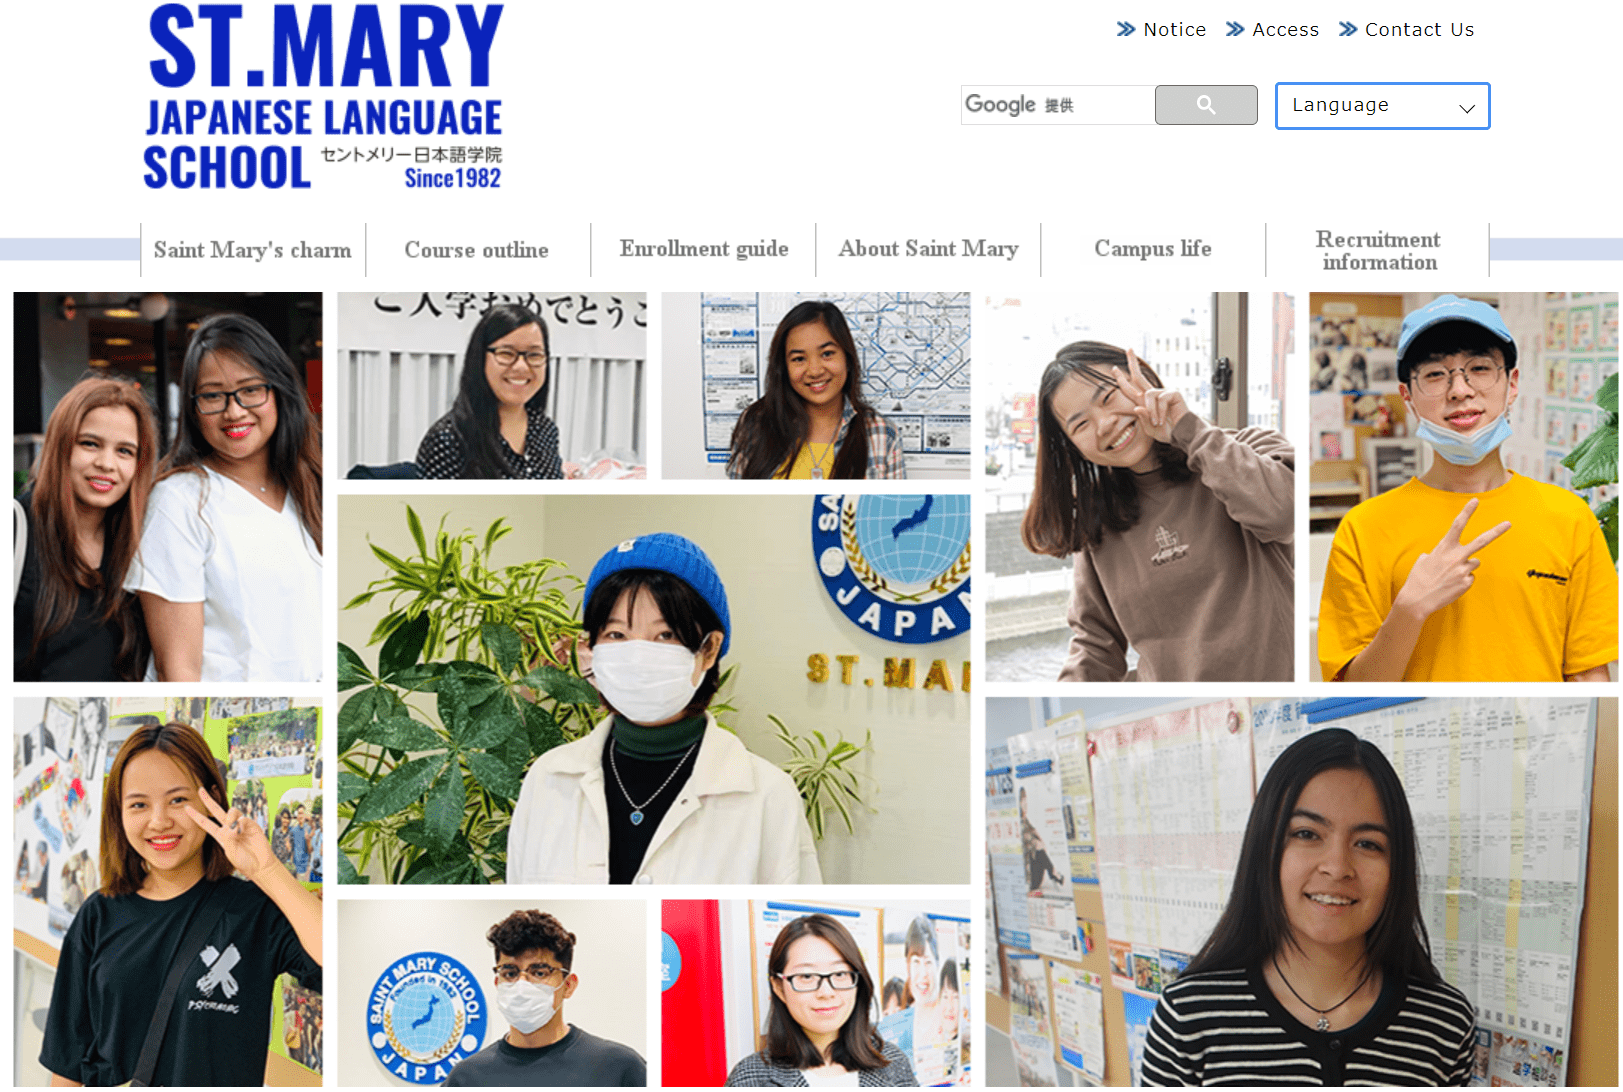 St. Mary Japanese Language School website